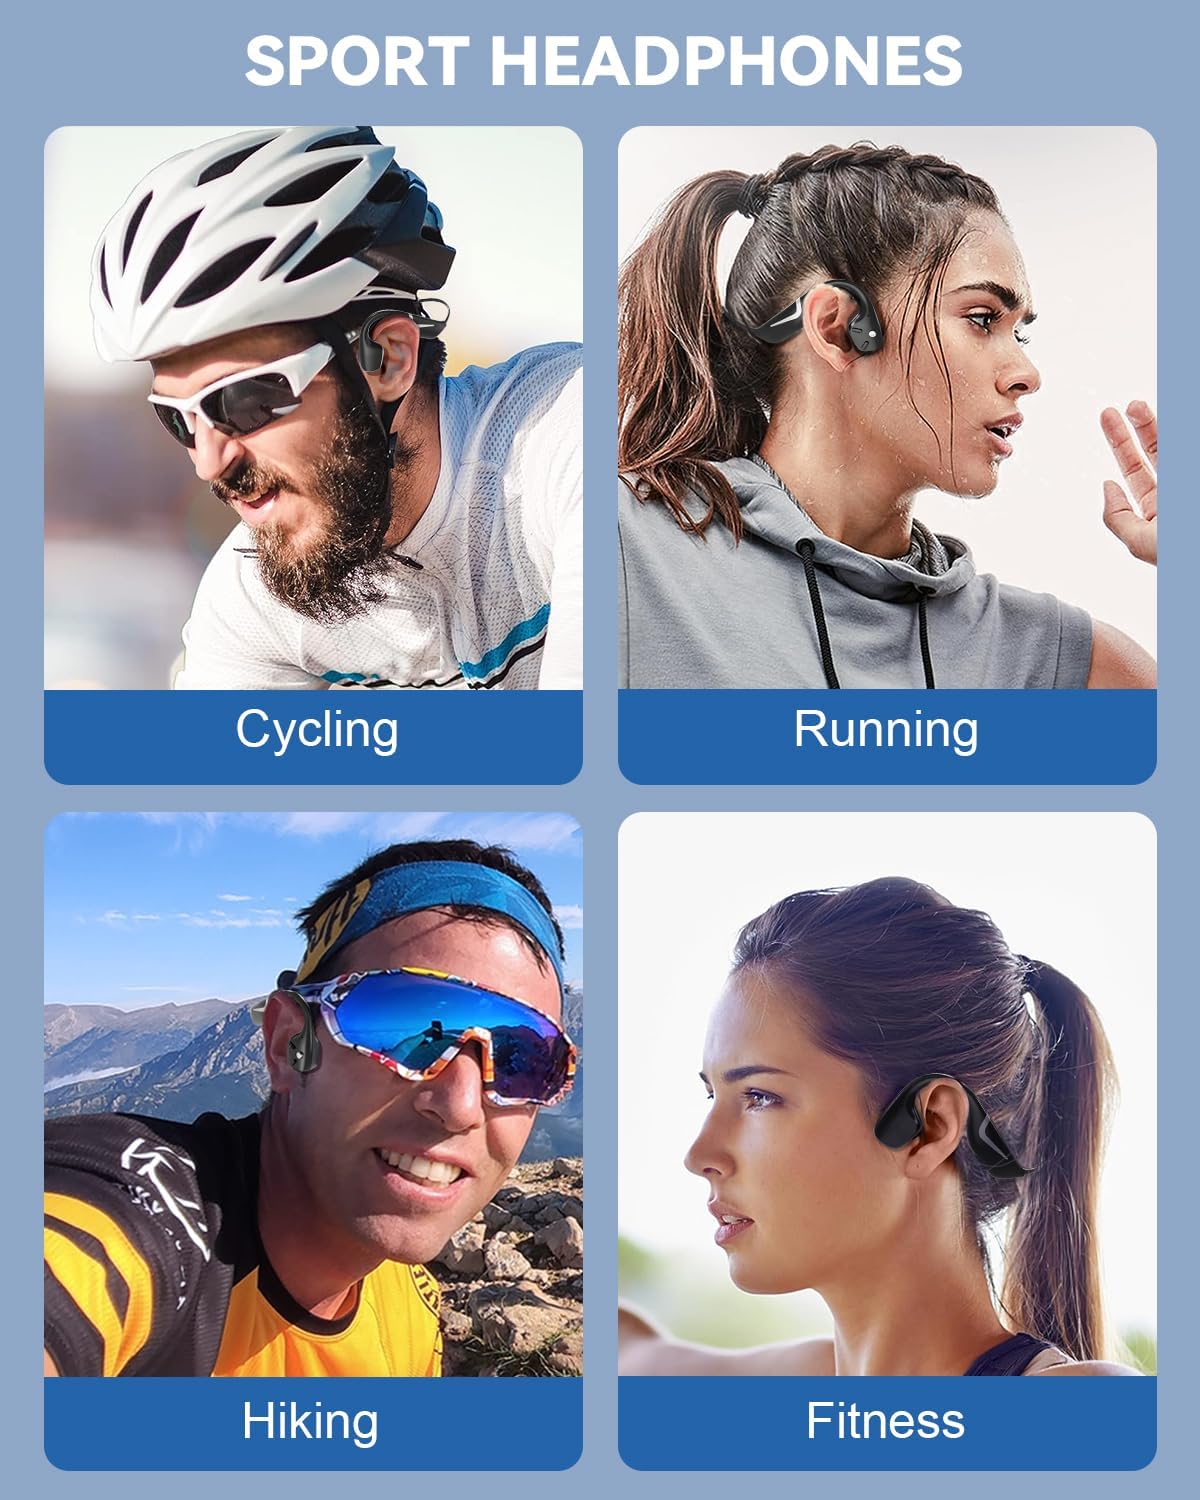 MONODEAL Bone Conduction Headphones Bluetooth, Open Ear Headphones with Mic, IP67 Waterproof Sport Headset Long Battery Life 15Hrs Wireless Earphones for Running Workout Cycling